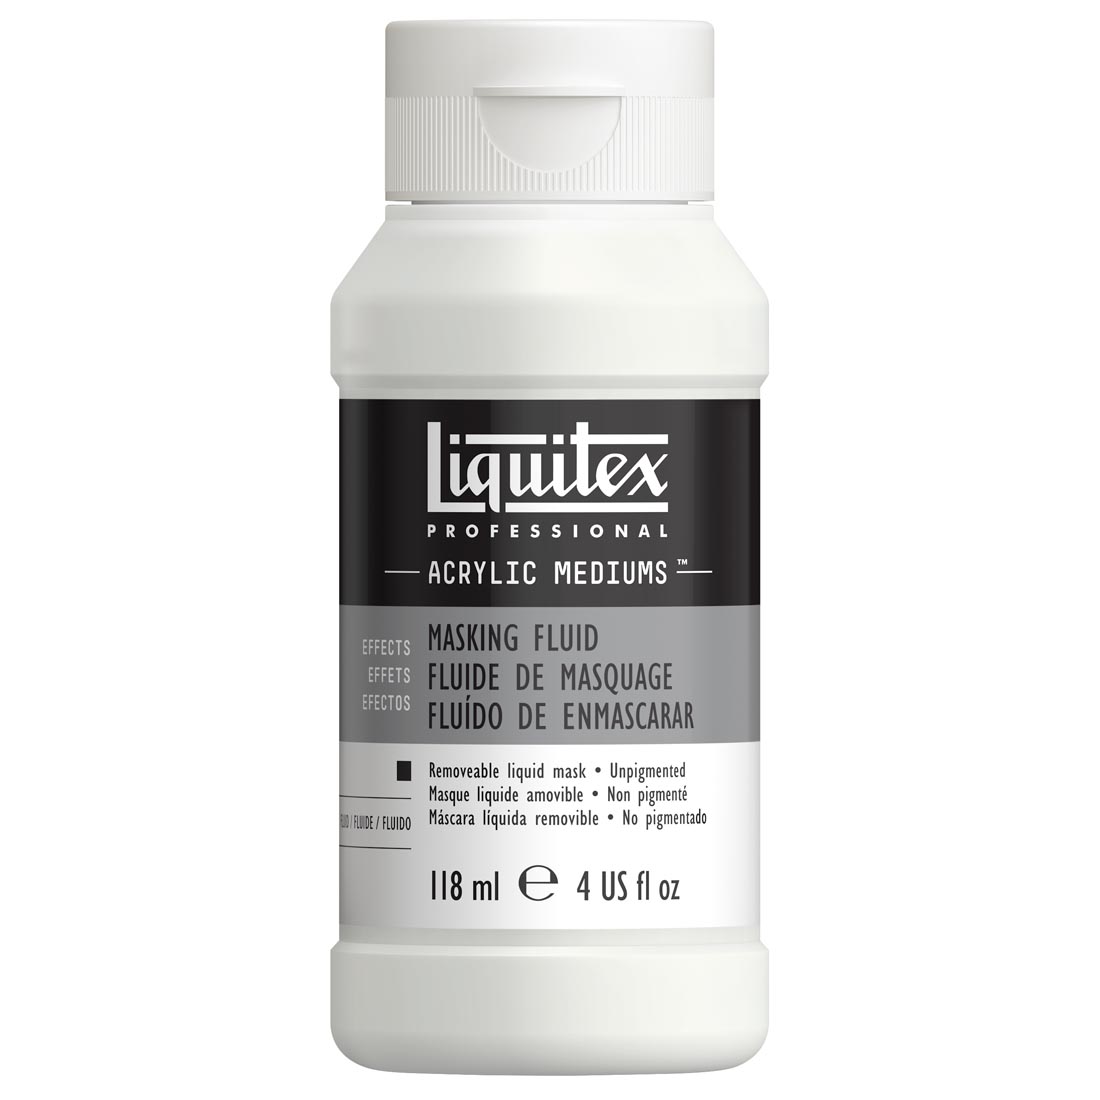 4 oz. bottle of Liquitex Masking Fluid